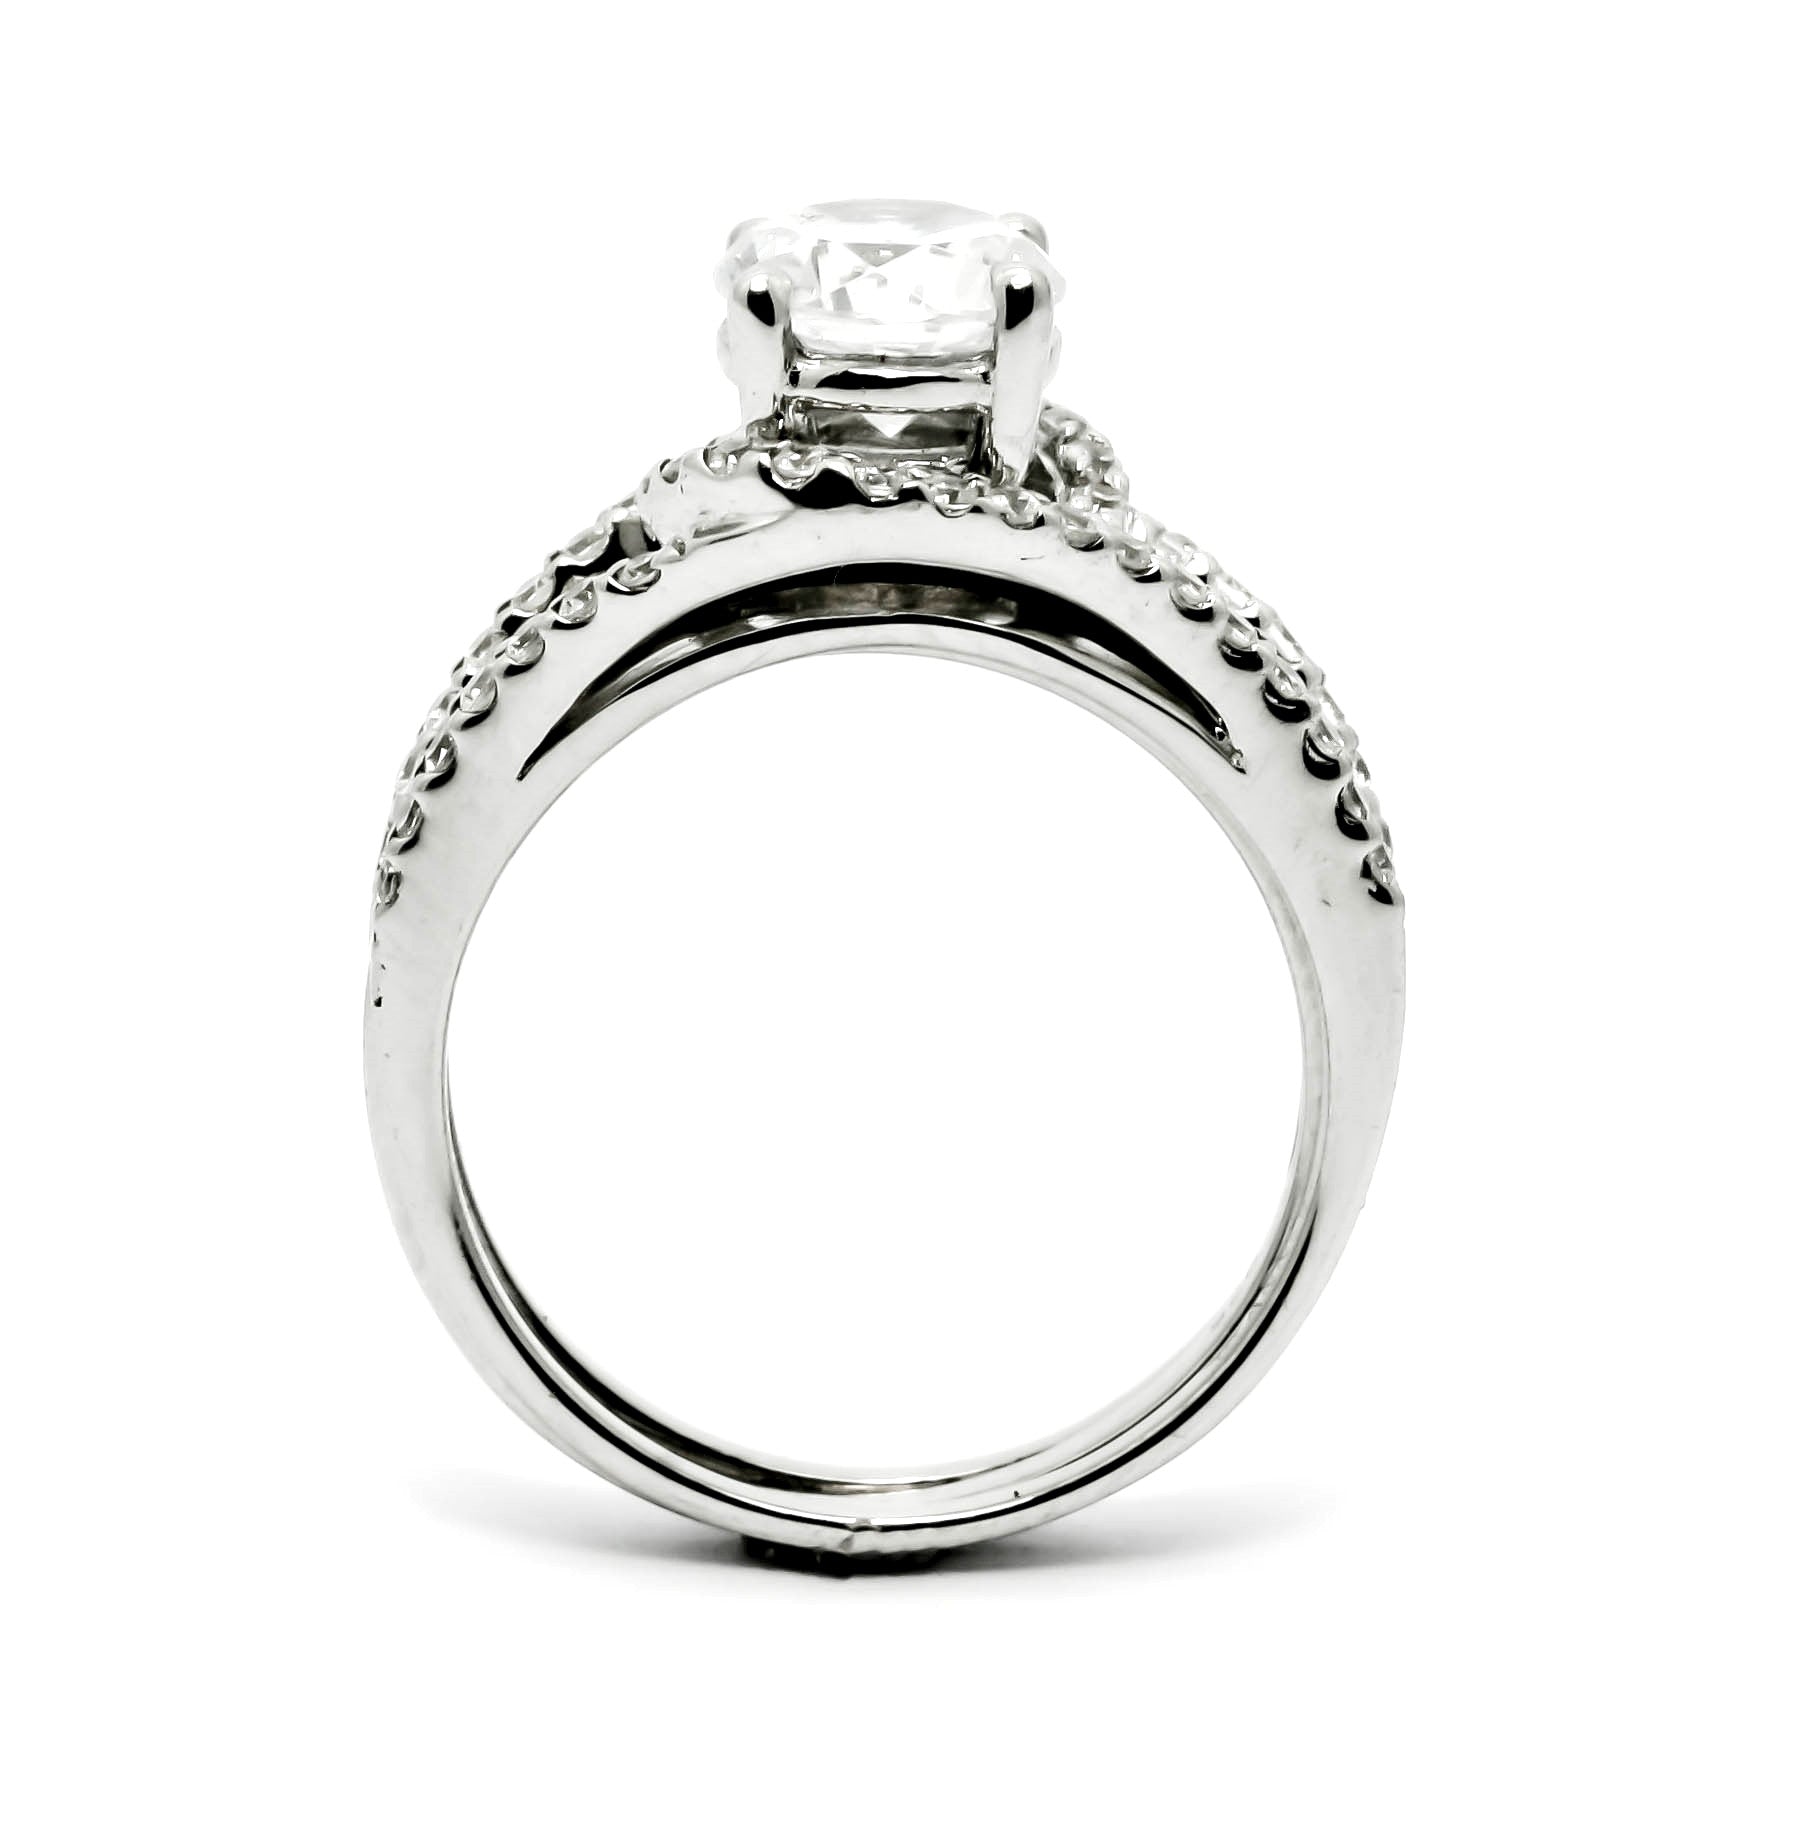 Semi Mount Unique Halo And Split Shank Design, Diamond Engagement/Wedding Set, For 1 Carat Center Stone Anniversary Ring - Y11580